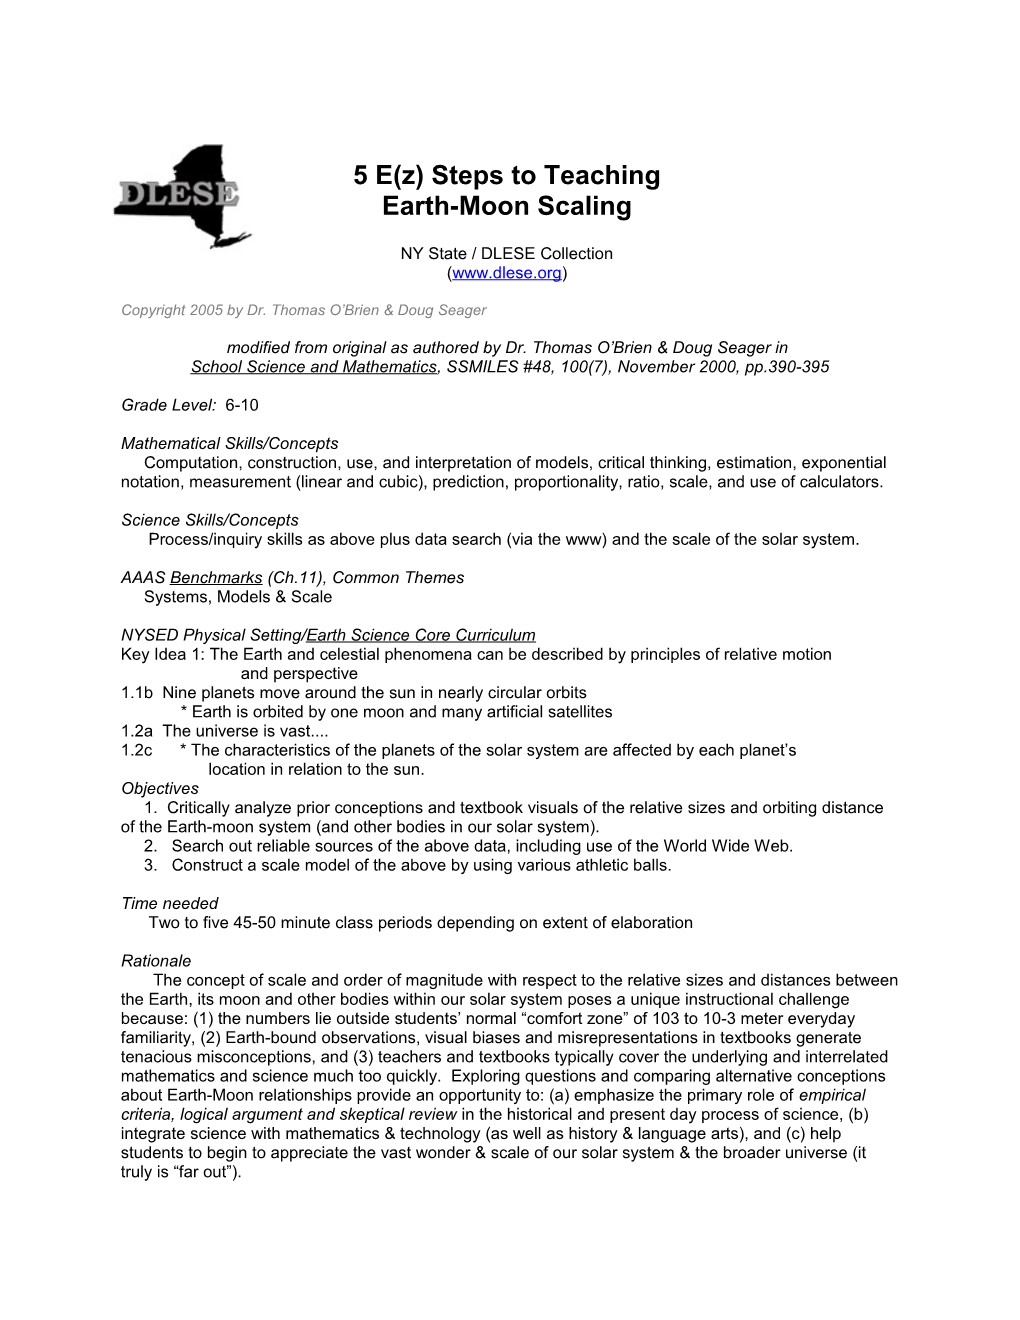 5 E(Z) Steps to Teaching Earth-Moon Scaling